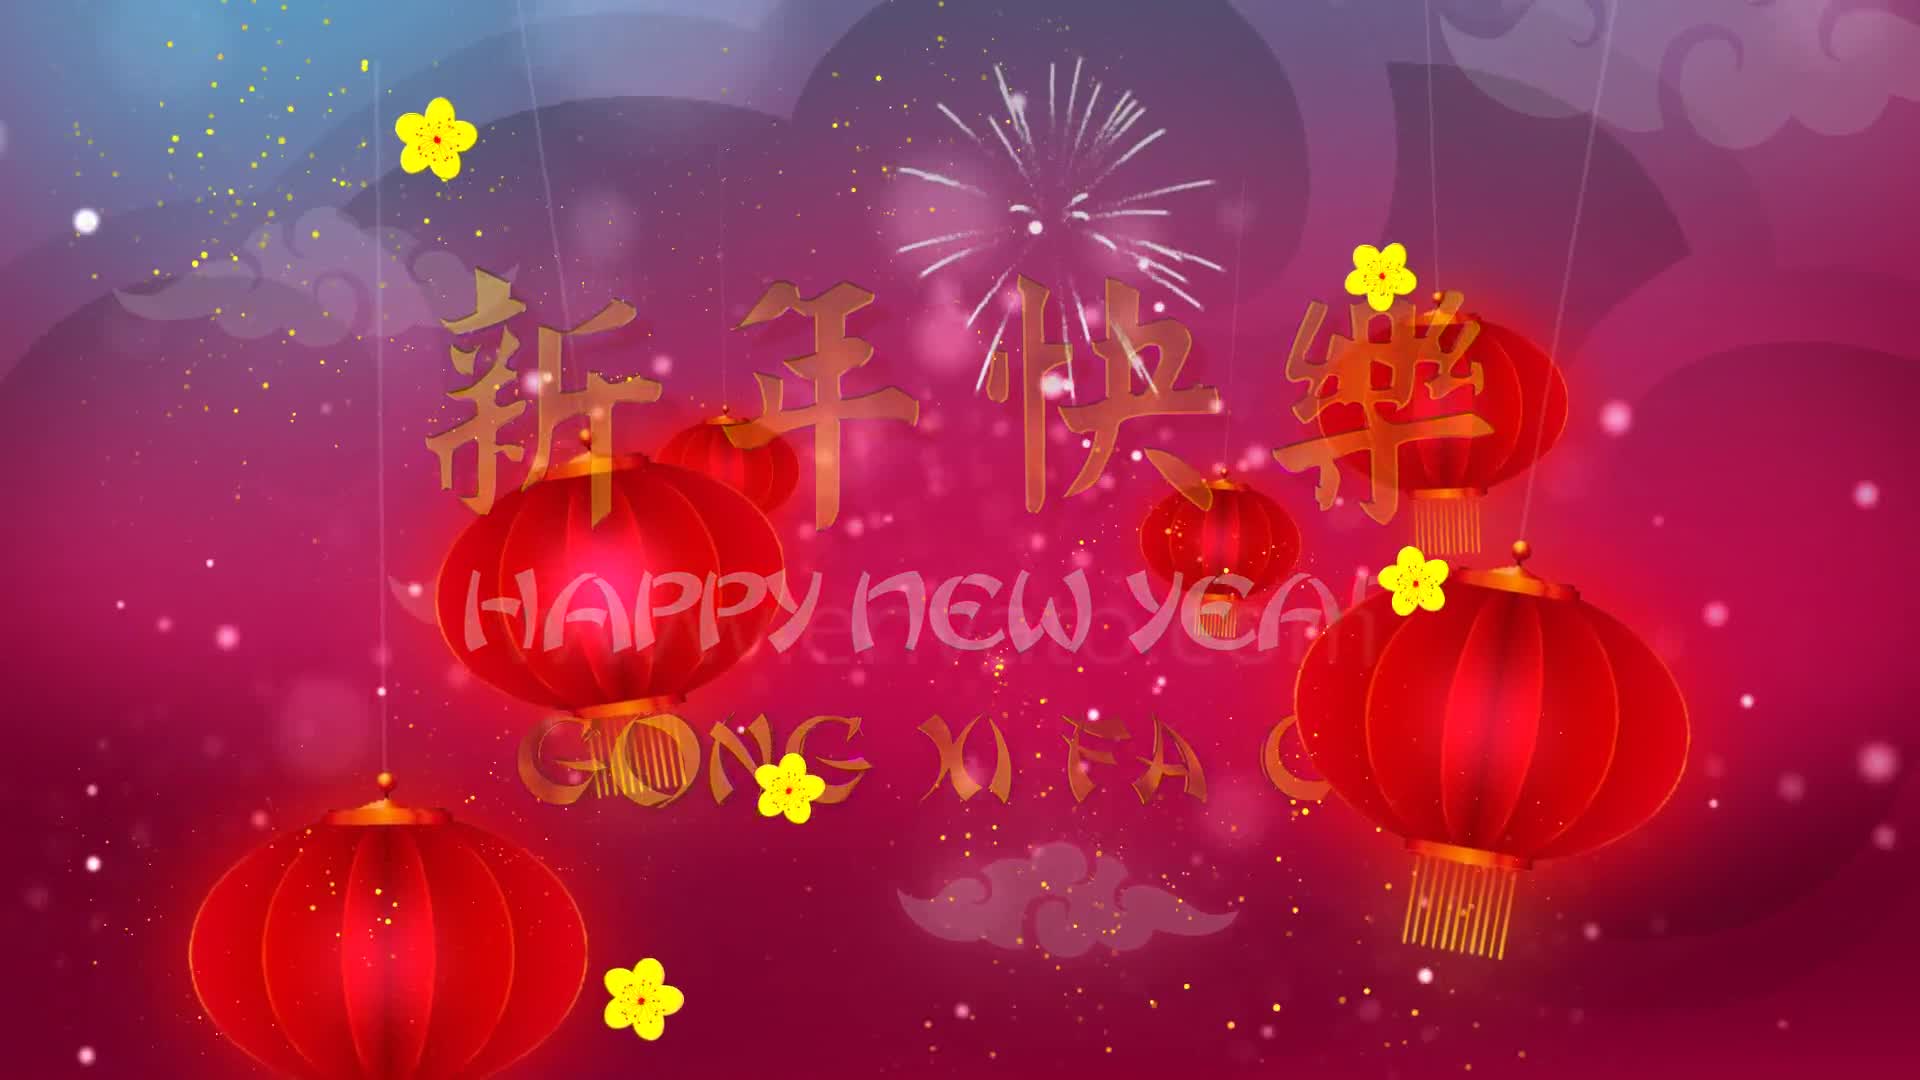 Chinese New Year Wish 2017 - Download Videohive 19287872